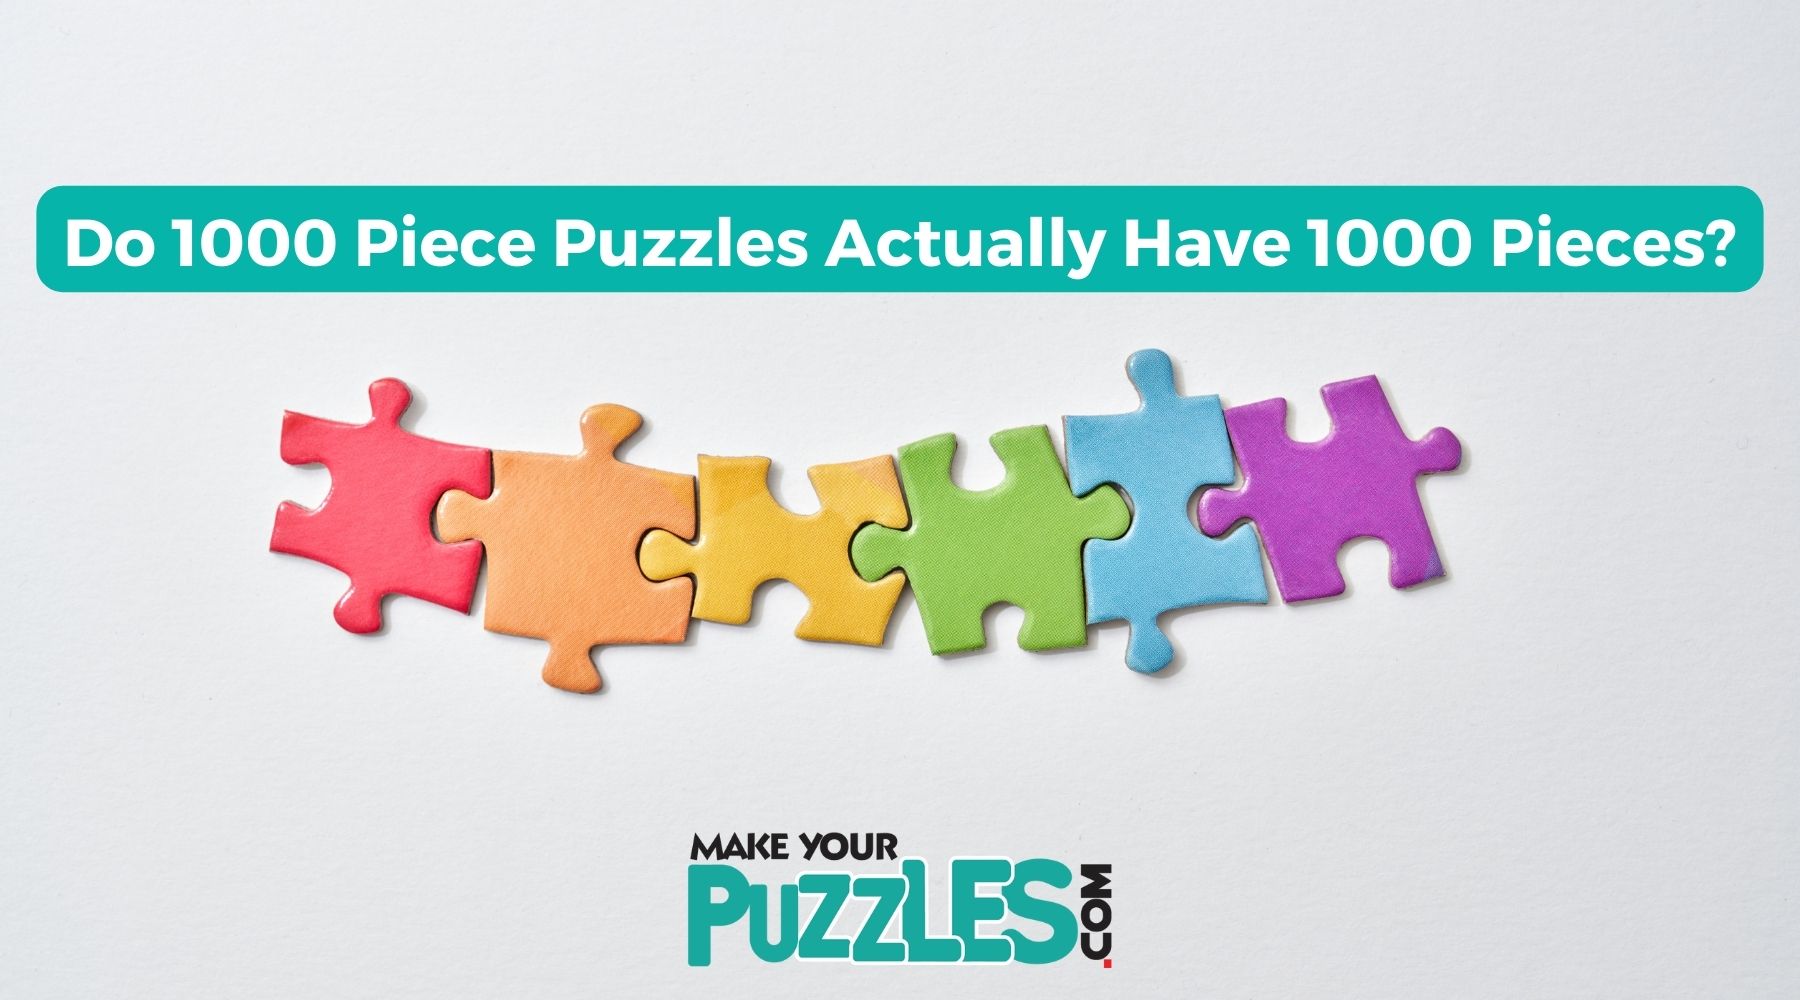 Do 1000 Piece Puzzles Actually Have 1000 Pieces?